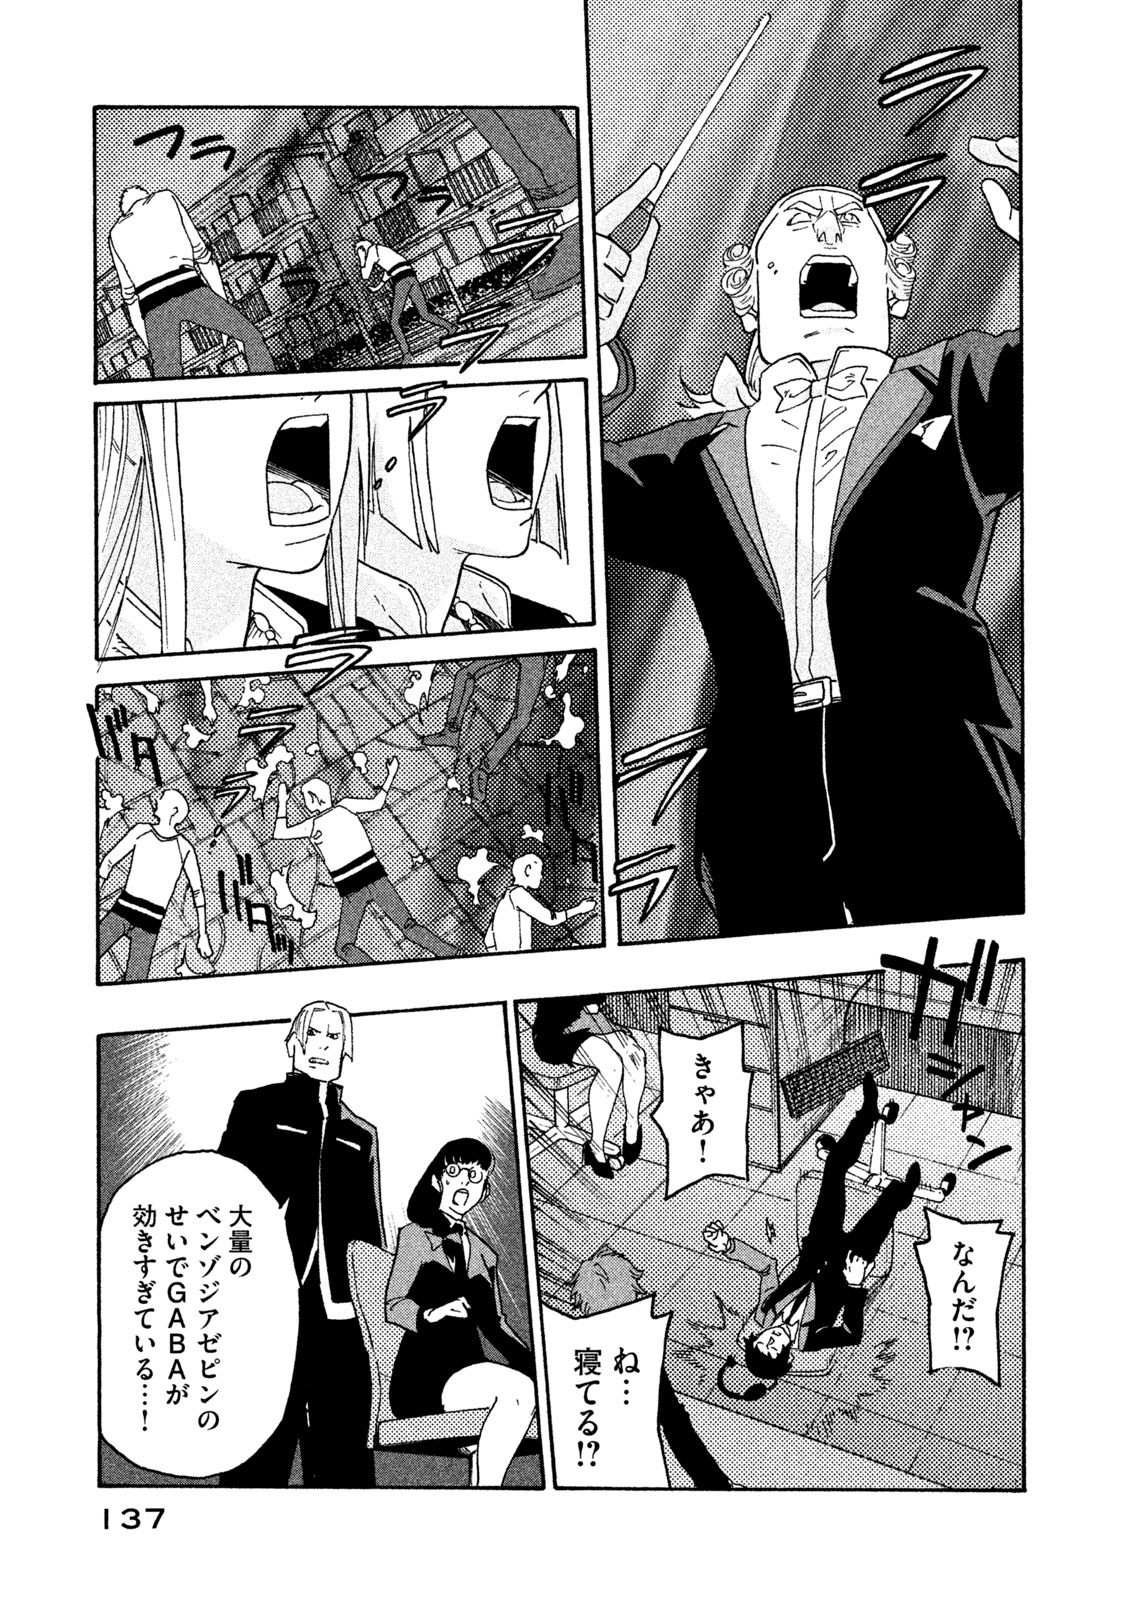 Hataraku Saibou BLACK - Chapter 31 - Page 13